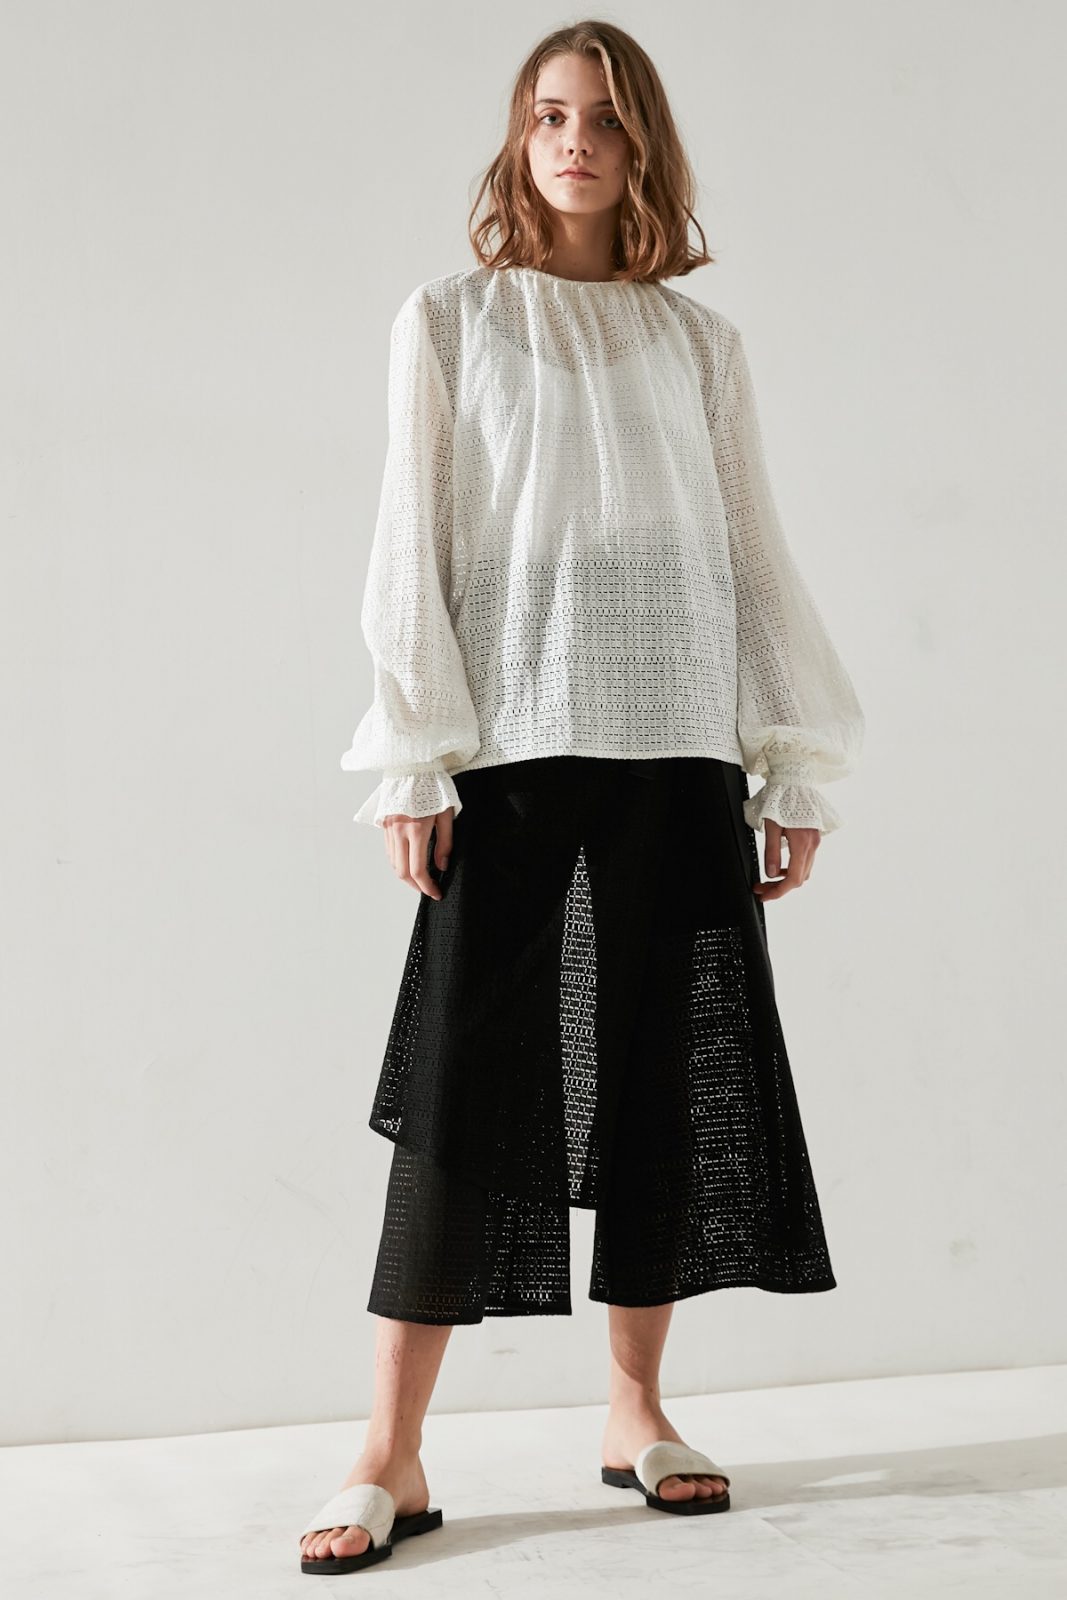 SKYE minimalist women fashion Aria cuolettes lace black 7